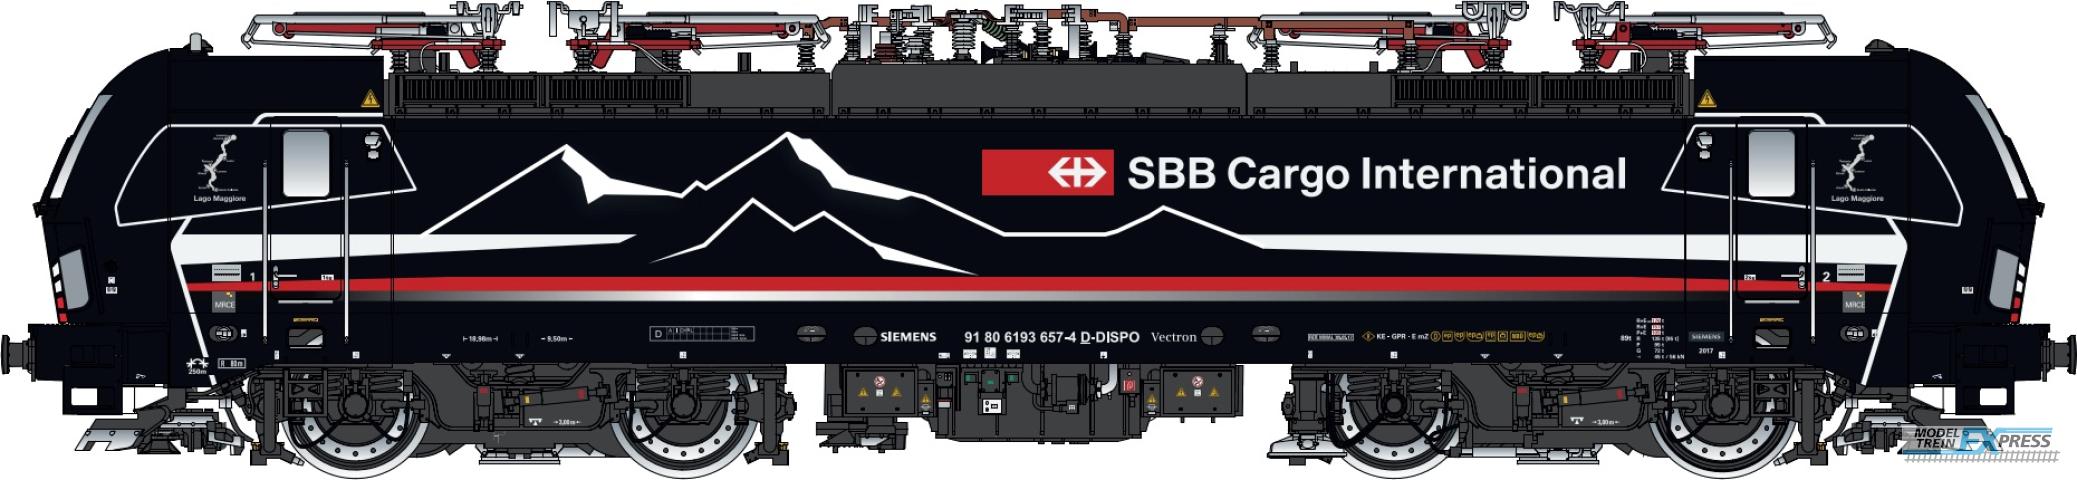 LS Models 17118S SBB Cargo/Shadowpiercer, 4 pantographs, Ep. VI (2019) 91 80 6193 657-4 D-DISPO  /  Ep. VI  /  ---  /  HO  /  DC SOUND  /  1 P.